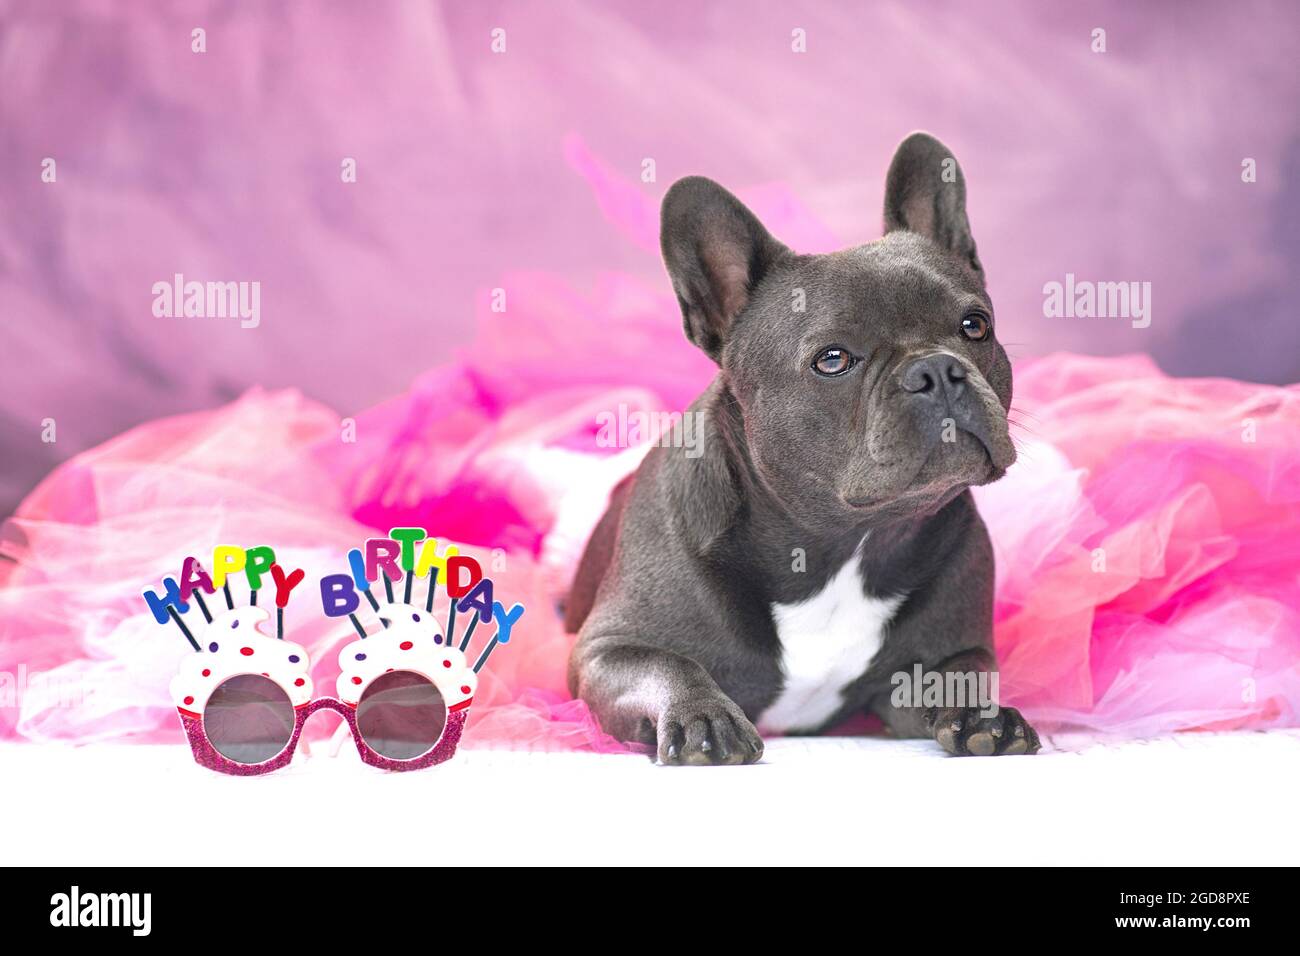 French Bulldog dog wearing pink tutu skirt with glasses saying 'Happy Birthday' Stock Photo